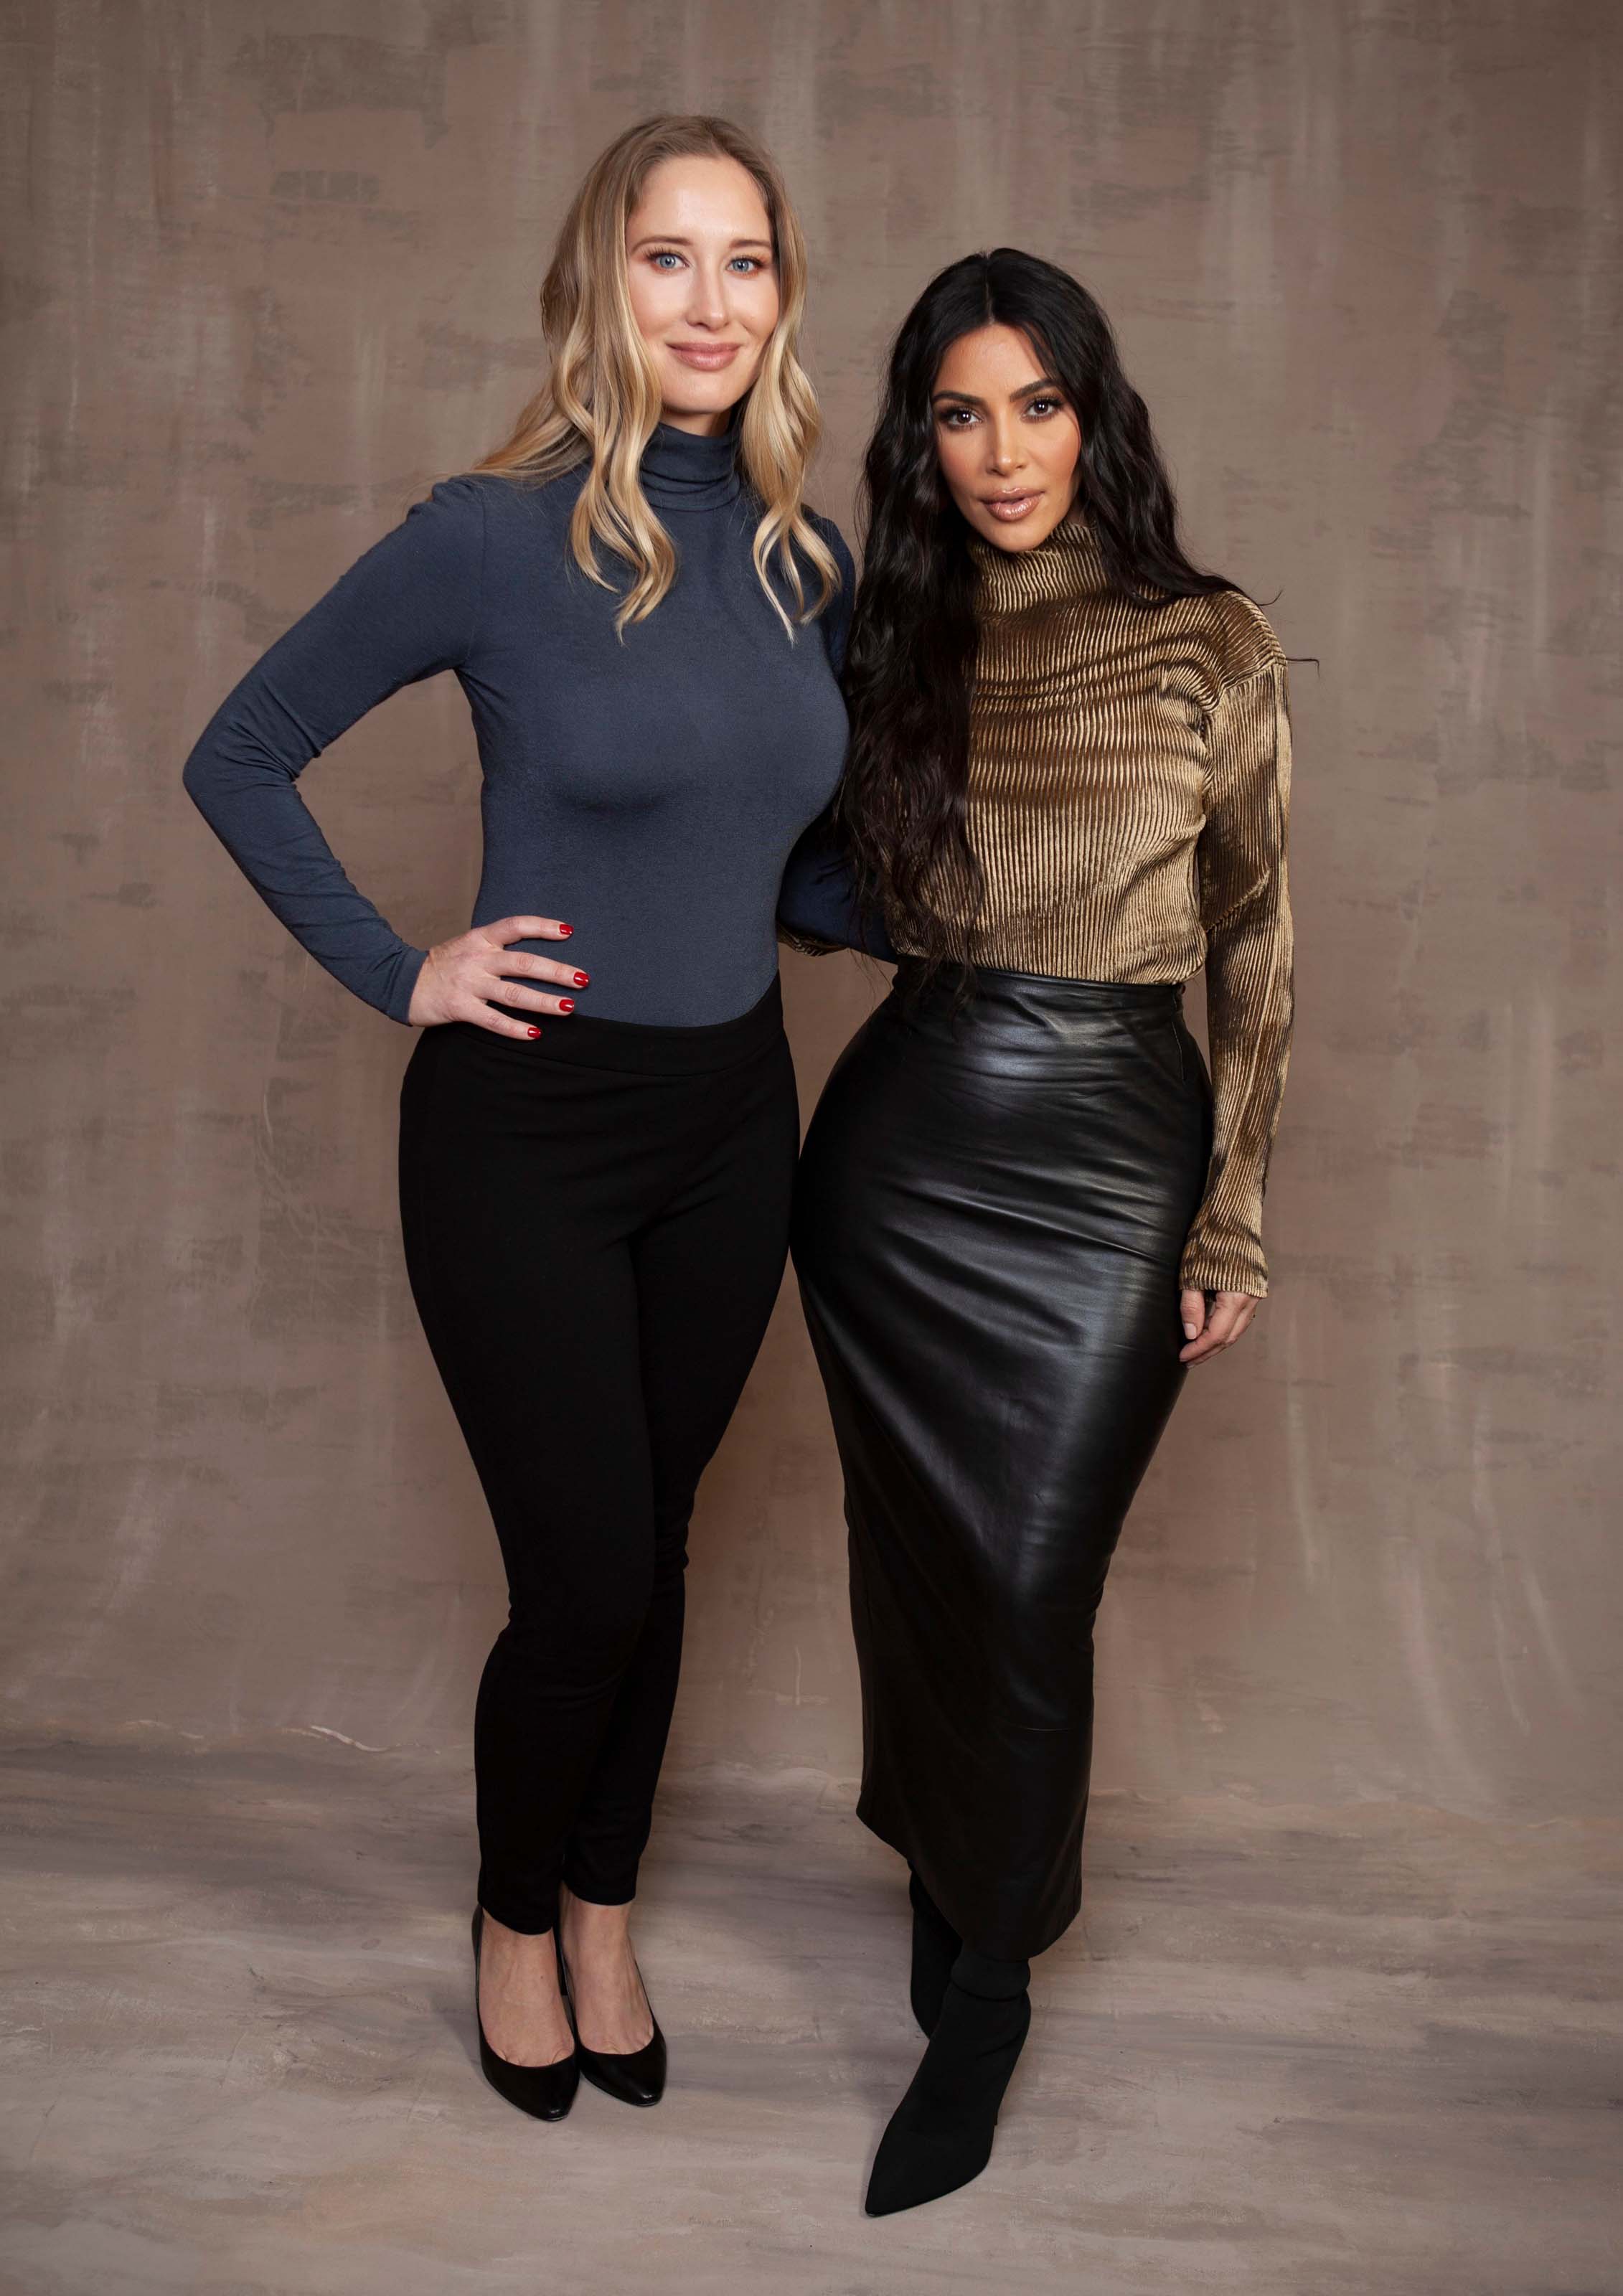 Kim Kardashian portrait at the 2020 Winter TCA